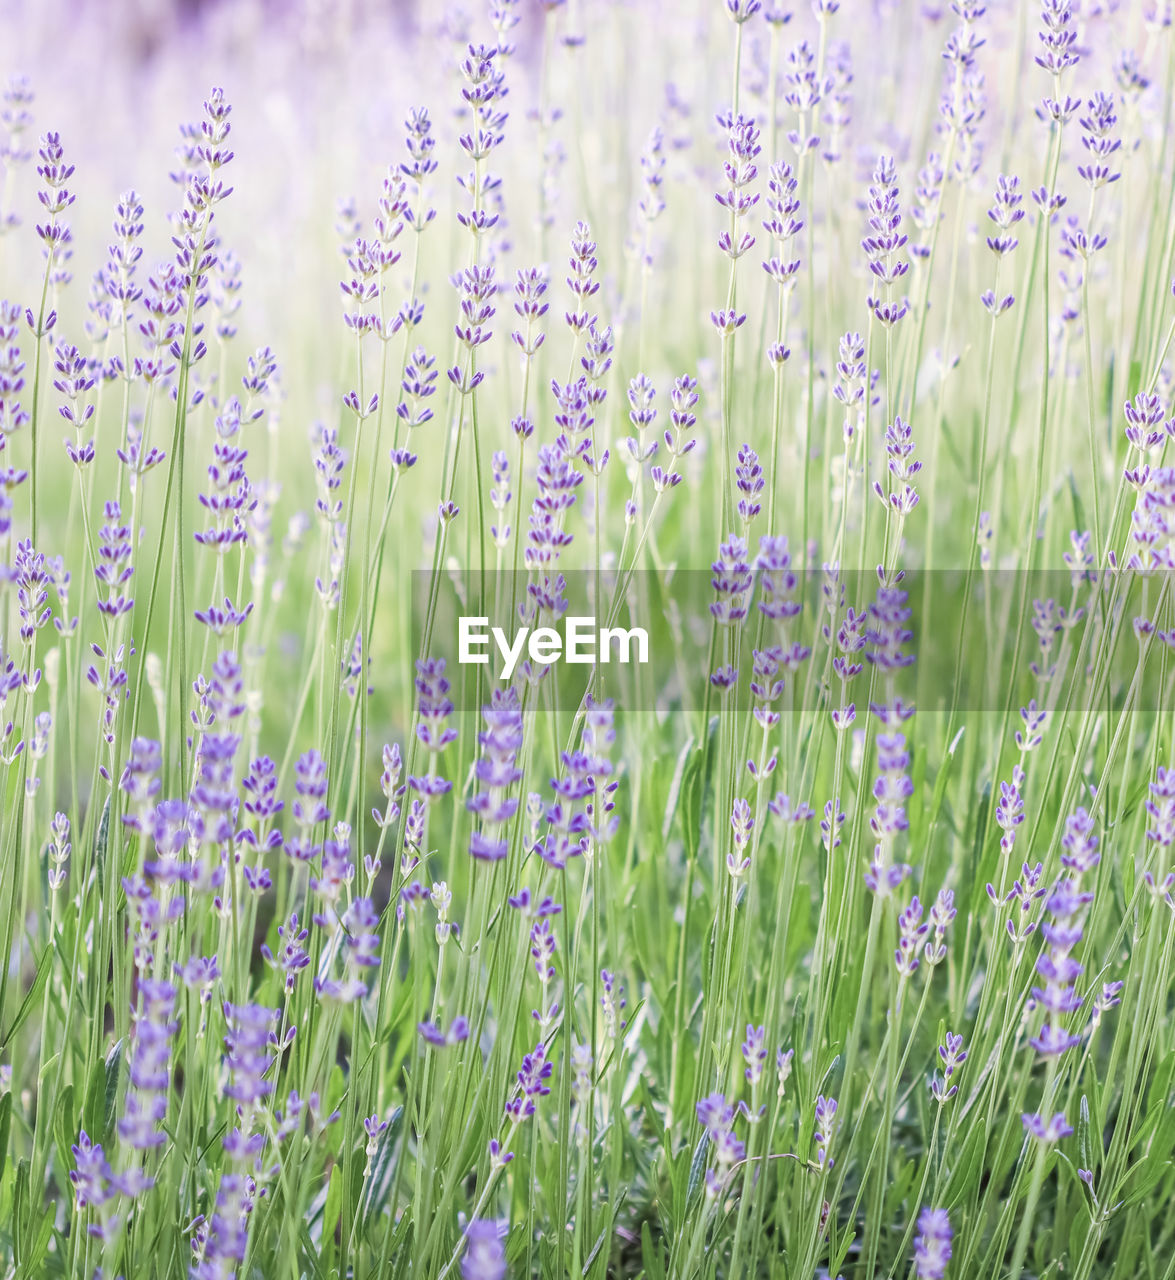 full frame shot of purple flowering plants on field